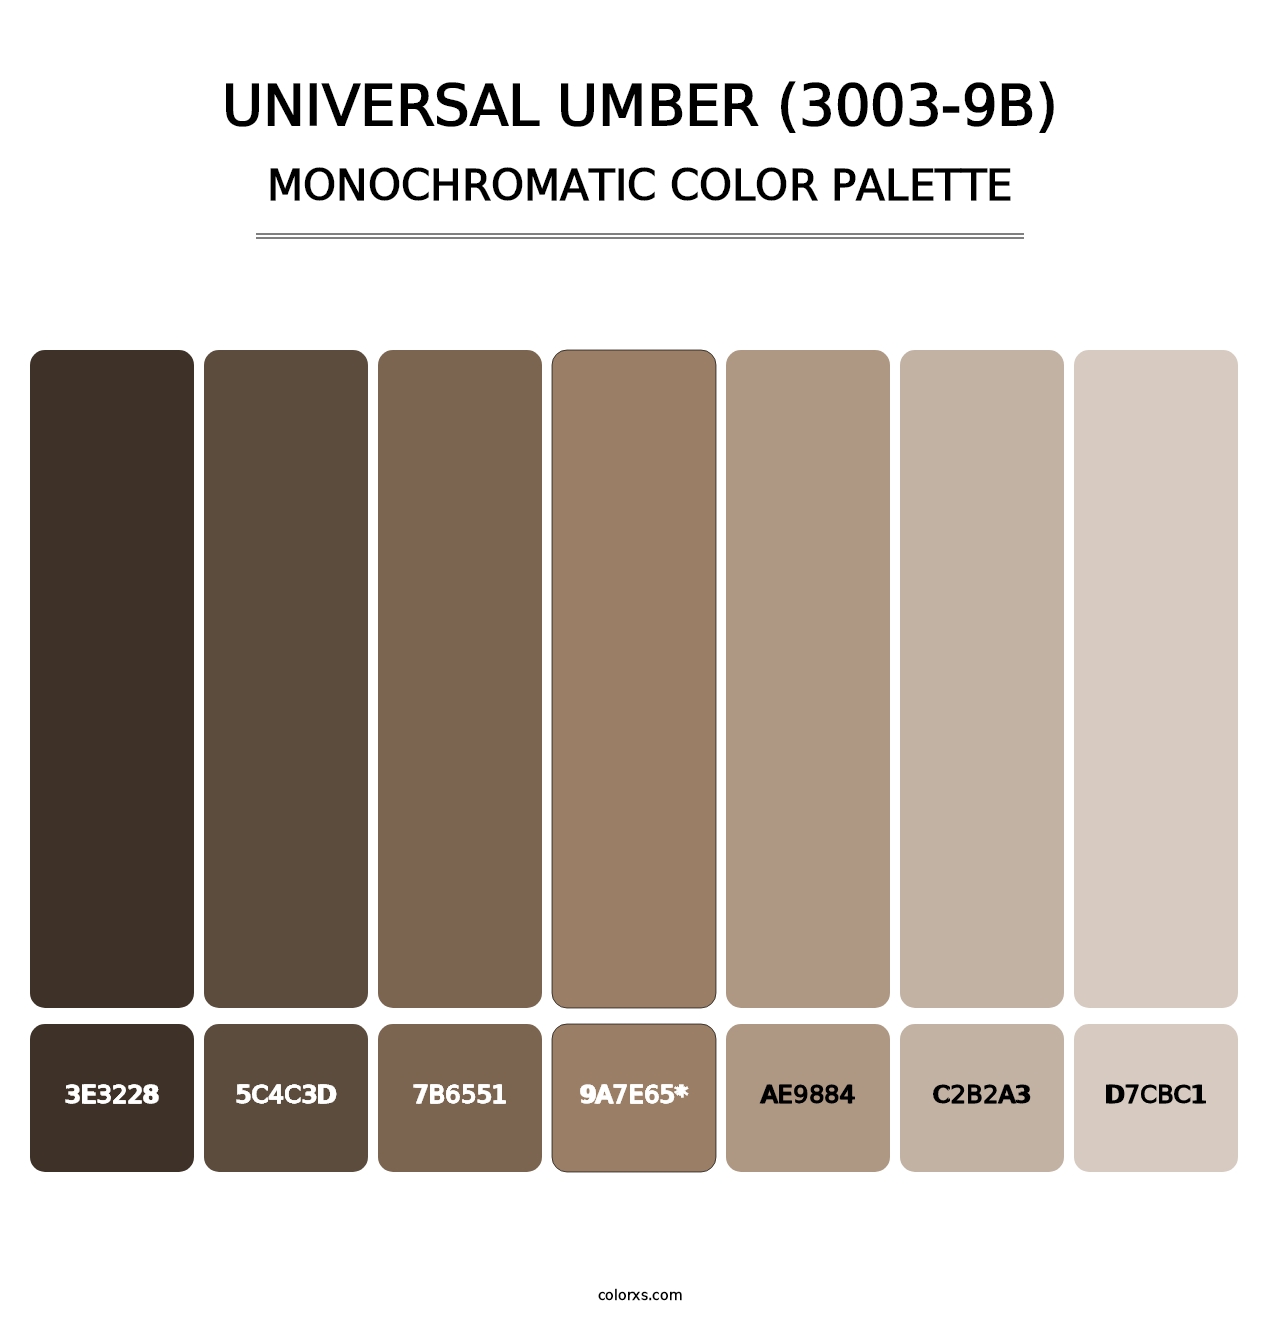 Universal Umber (3003-9B) - Monochromatic Color Palette